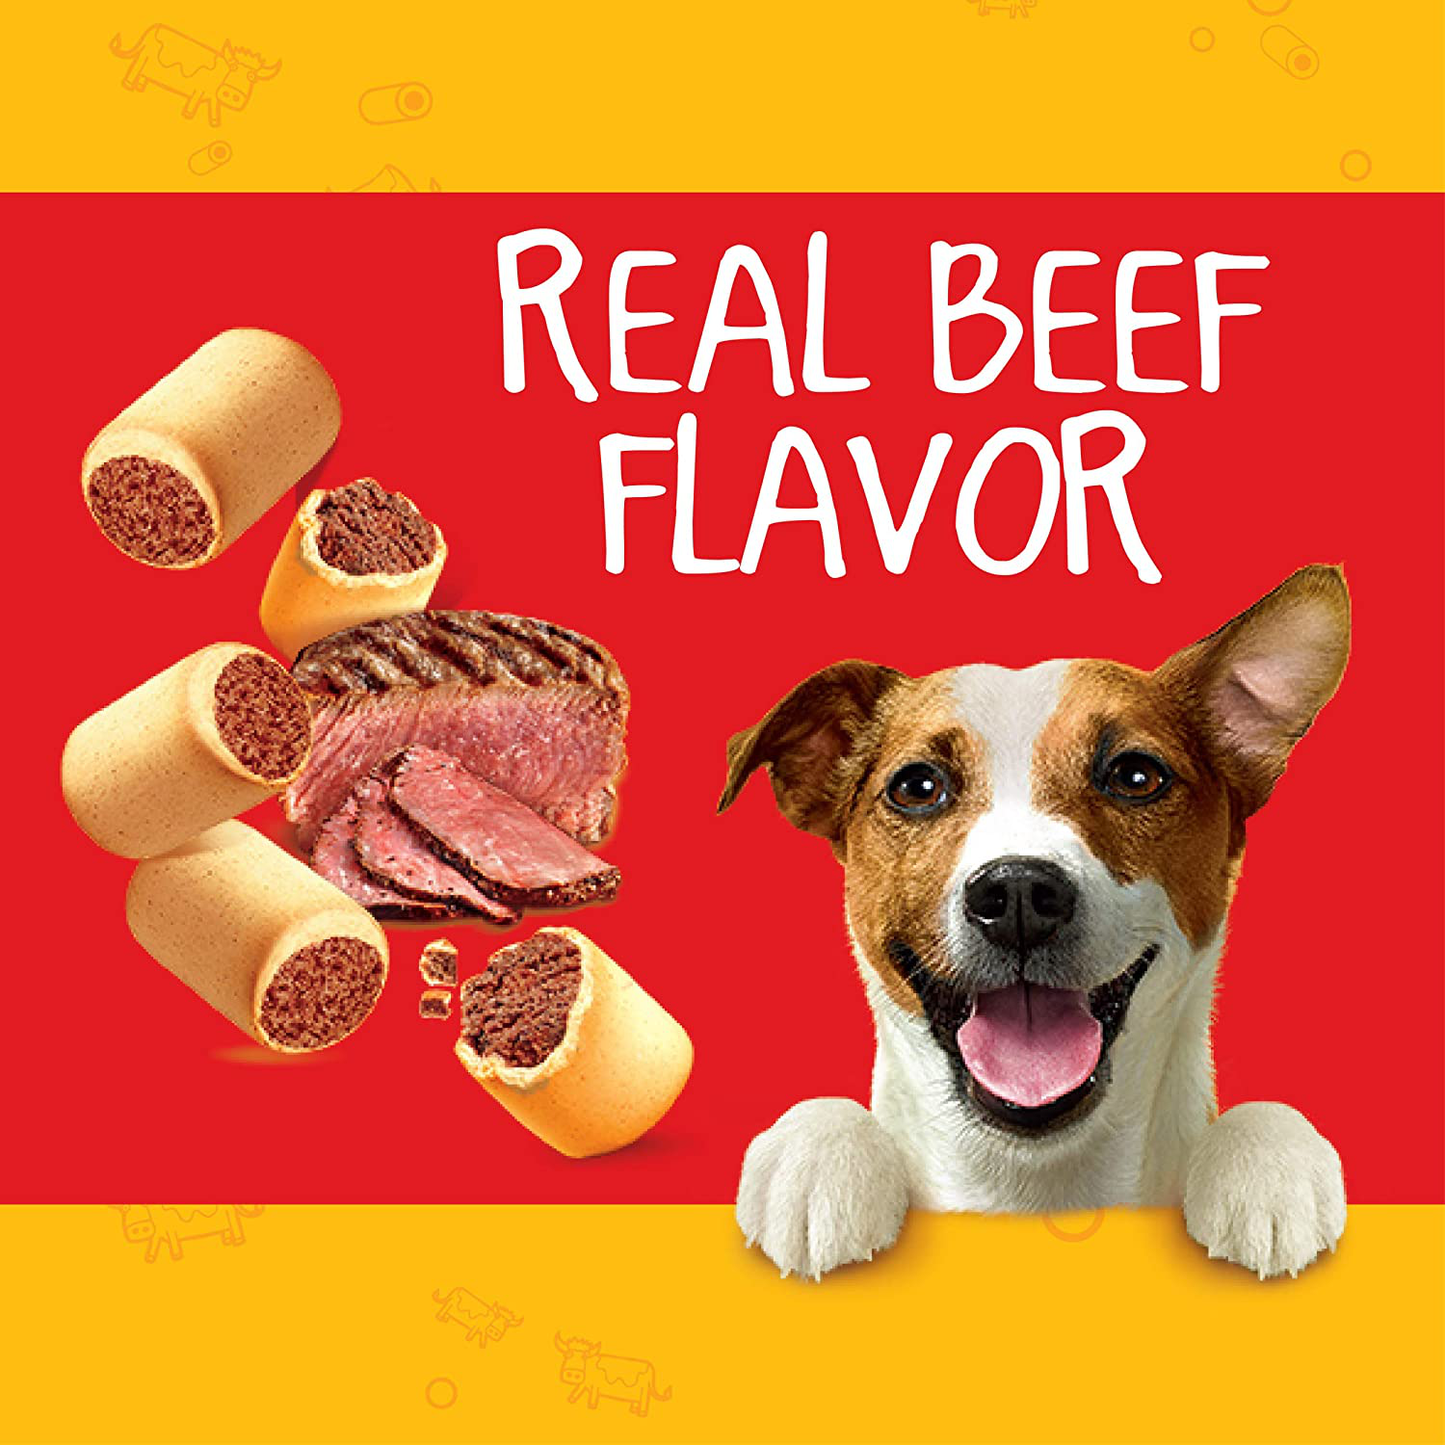 Pedigree Marrobone Dog Treats, Beef Flavor Animals & Pet Supplies > Pet Supplies > Dog Supplies > Dog Treats Pedigree   